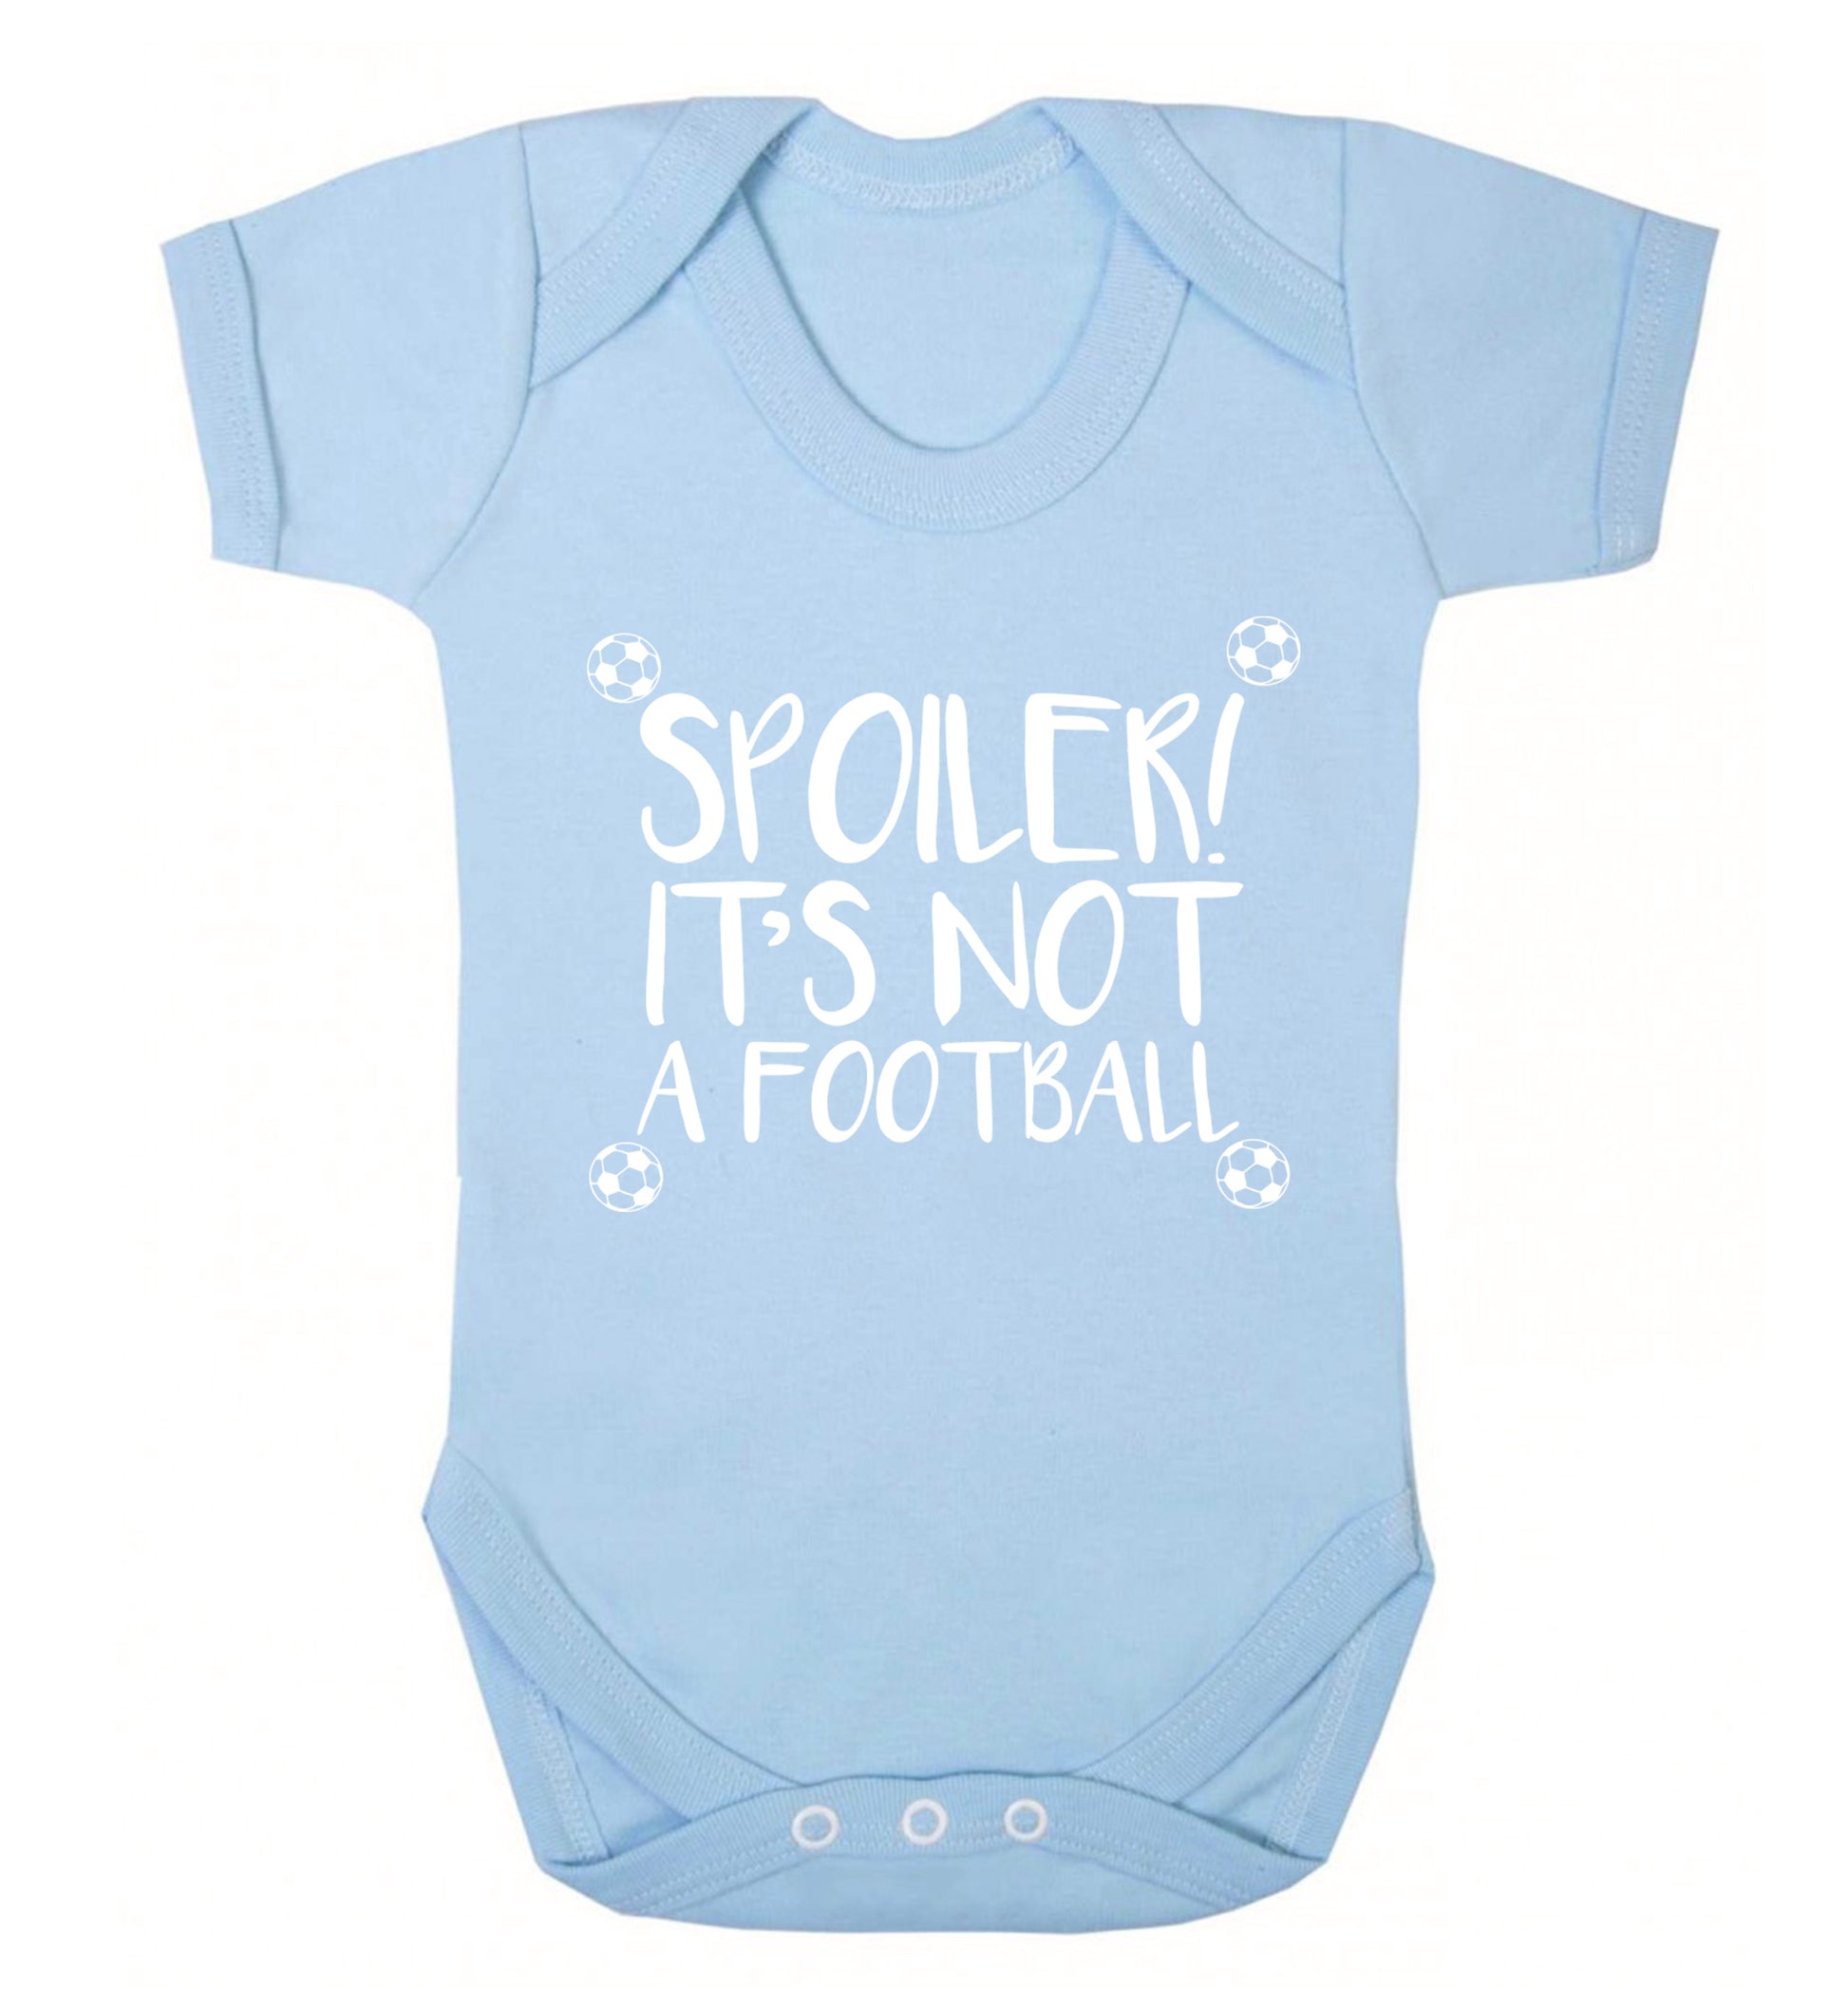 Spoiler it's not a football Baby Vest pale blue 18-24 months